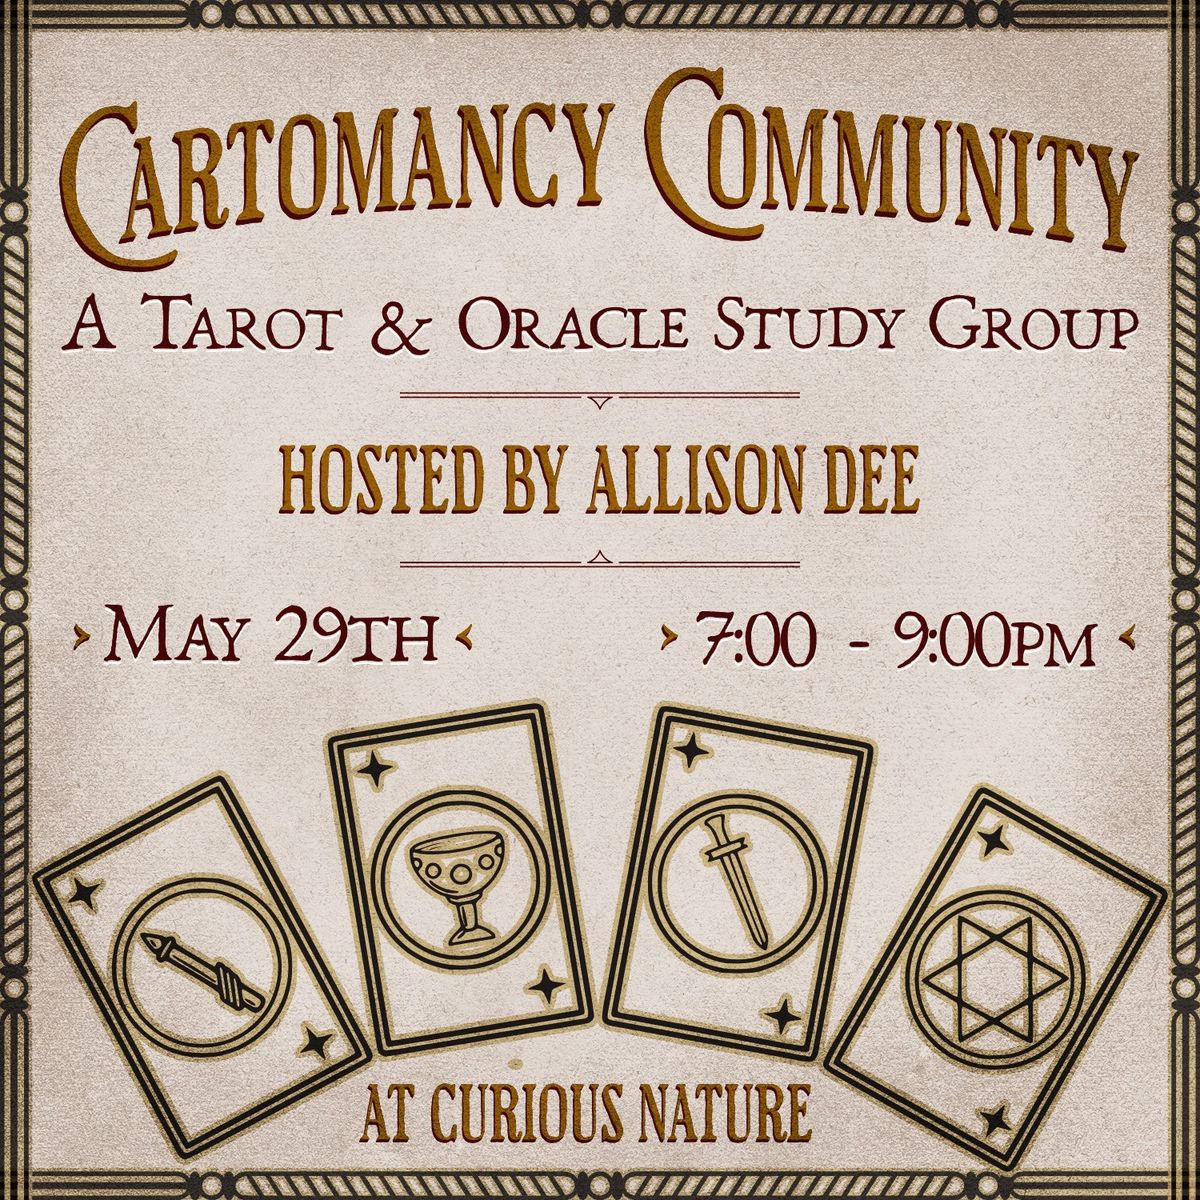 Cartomancy Community: A Tarot & Oracle Study Group